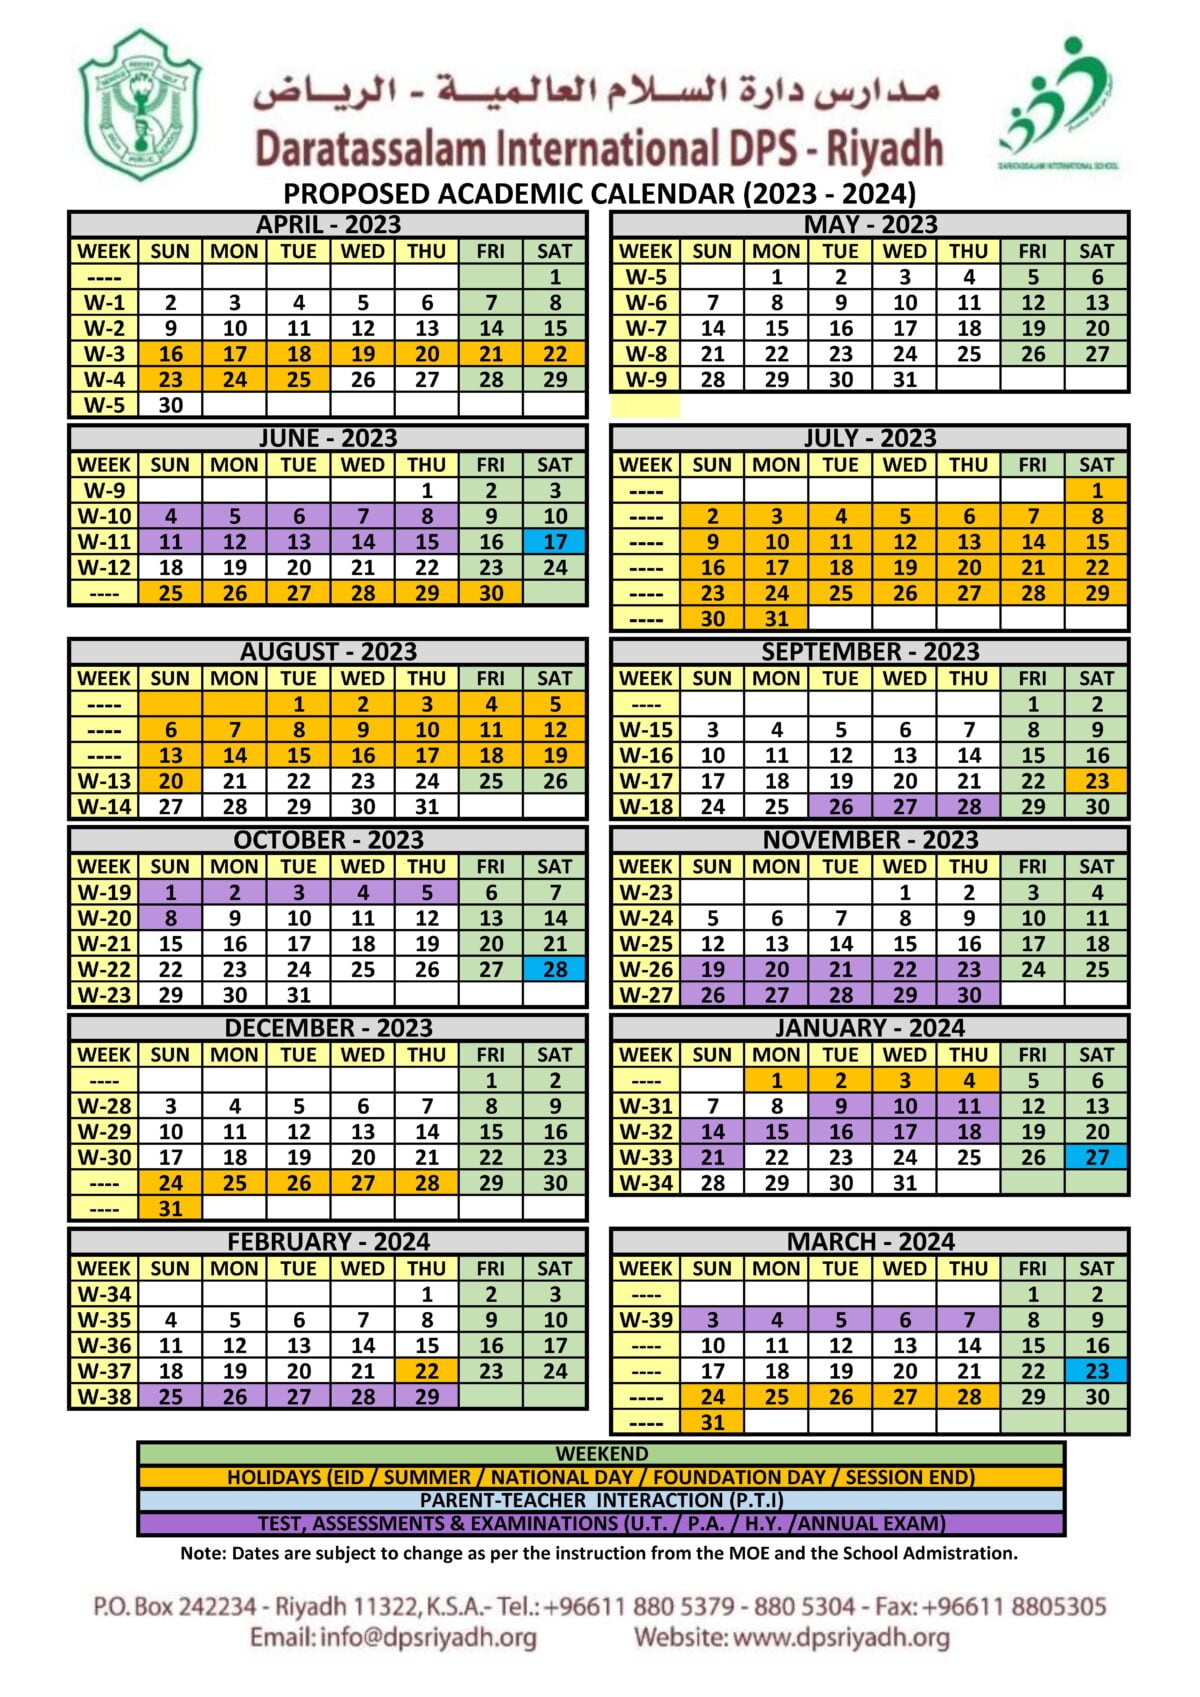 Academic Calendar (2023 2024) DPS Riyadh